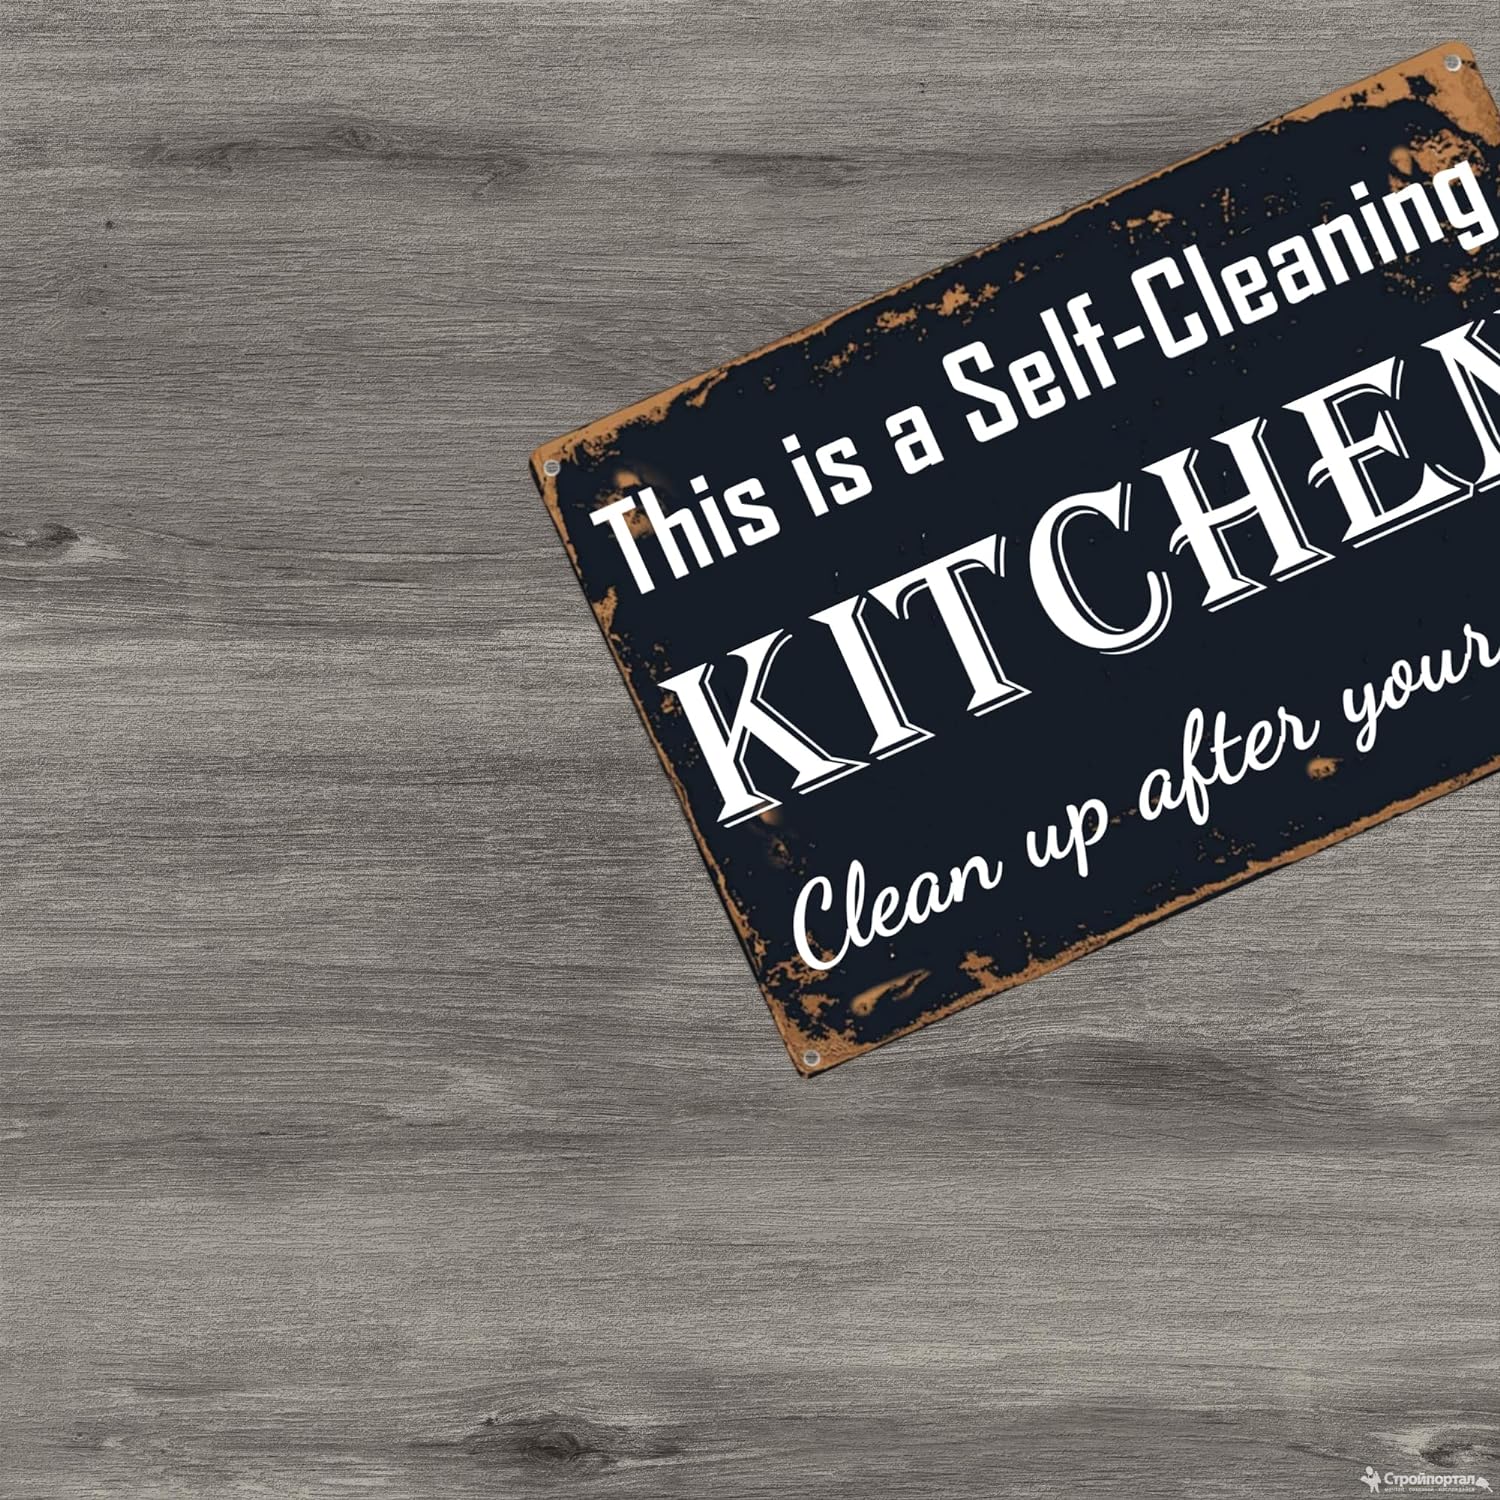 Letrero de metal vintage con texto en inglés "This is a Self-Cleaning Kitchen